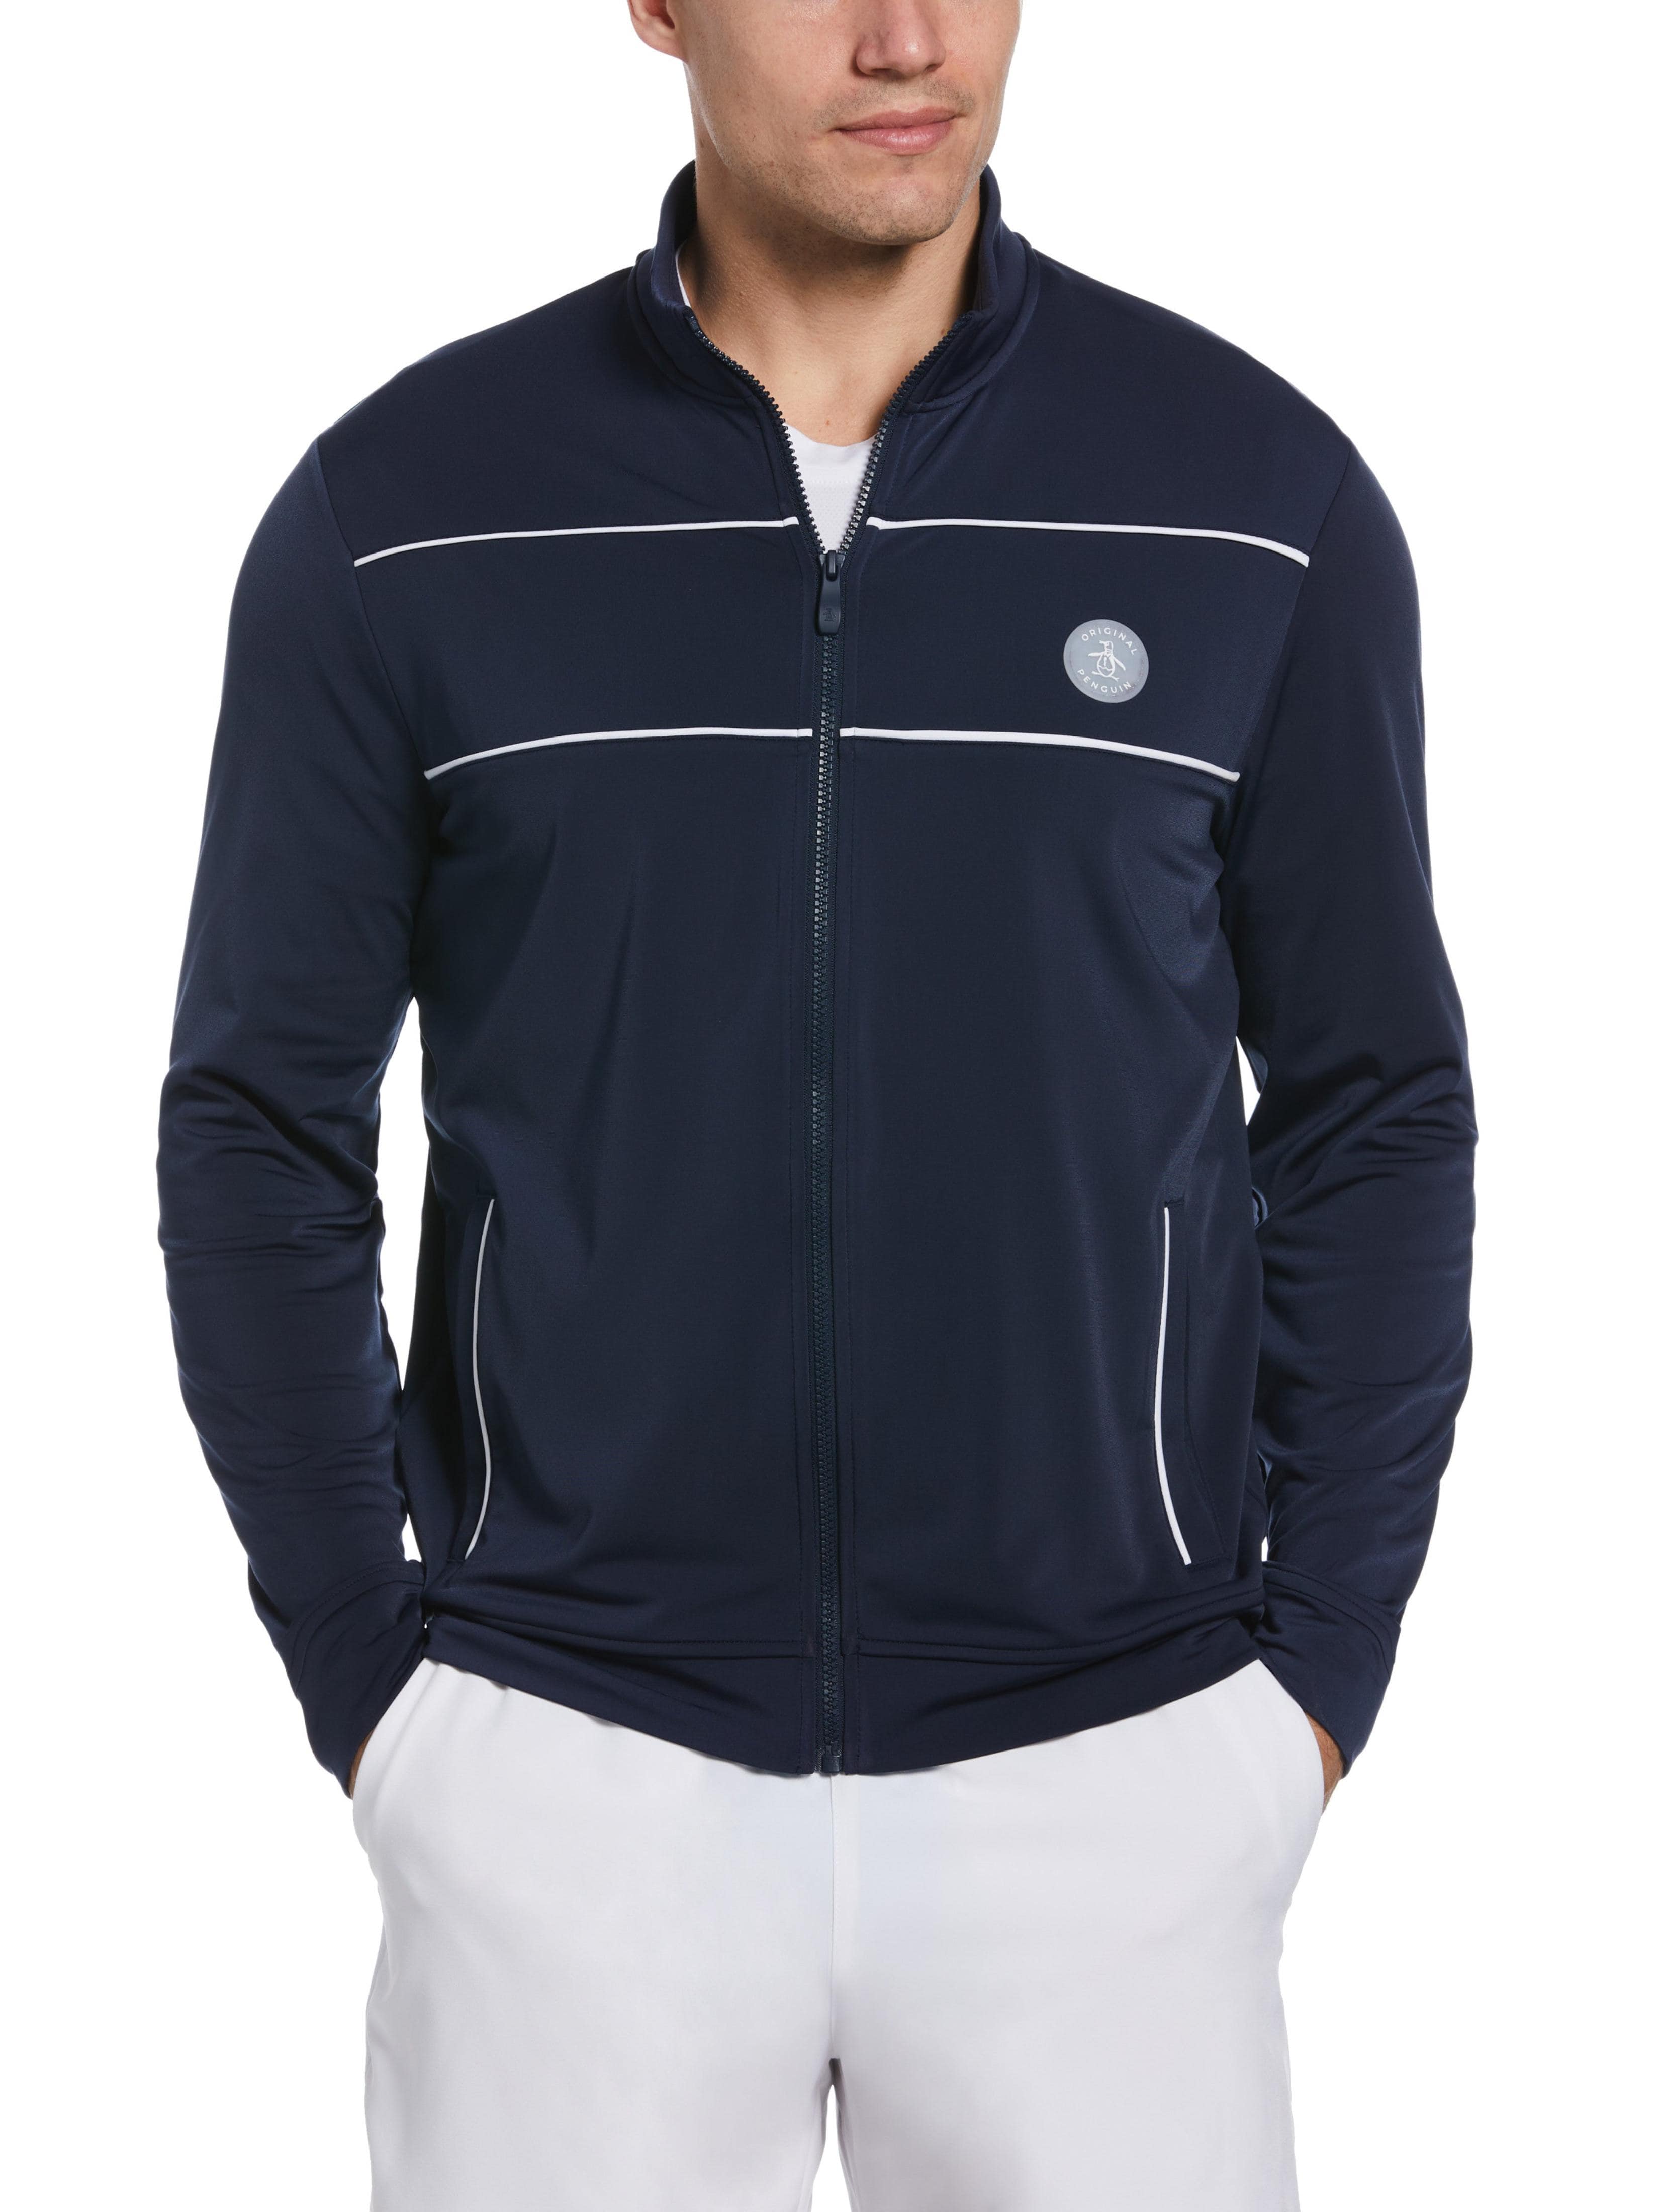 Original Penguin Mens Essential Tennis Track Jacket Top, Size Large, Dark Navy Blue, Polyester/Elastane | Golf Apparel Shop